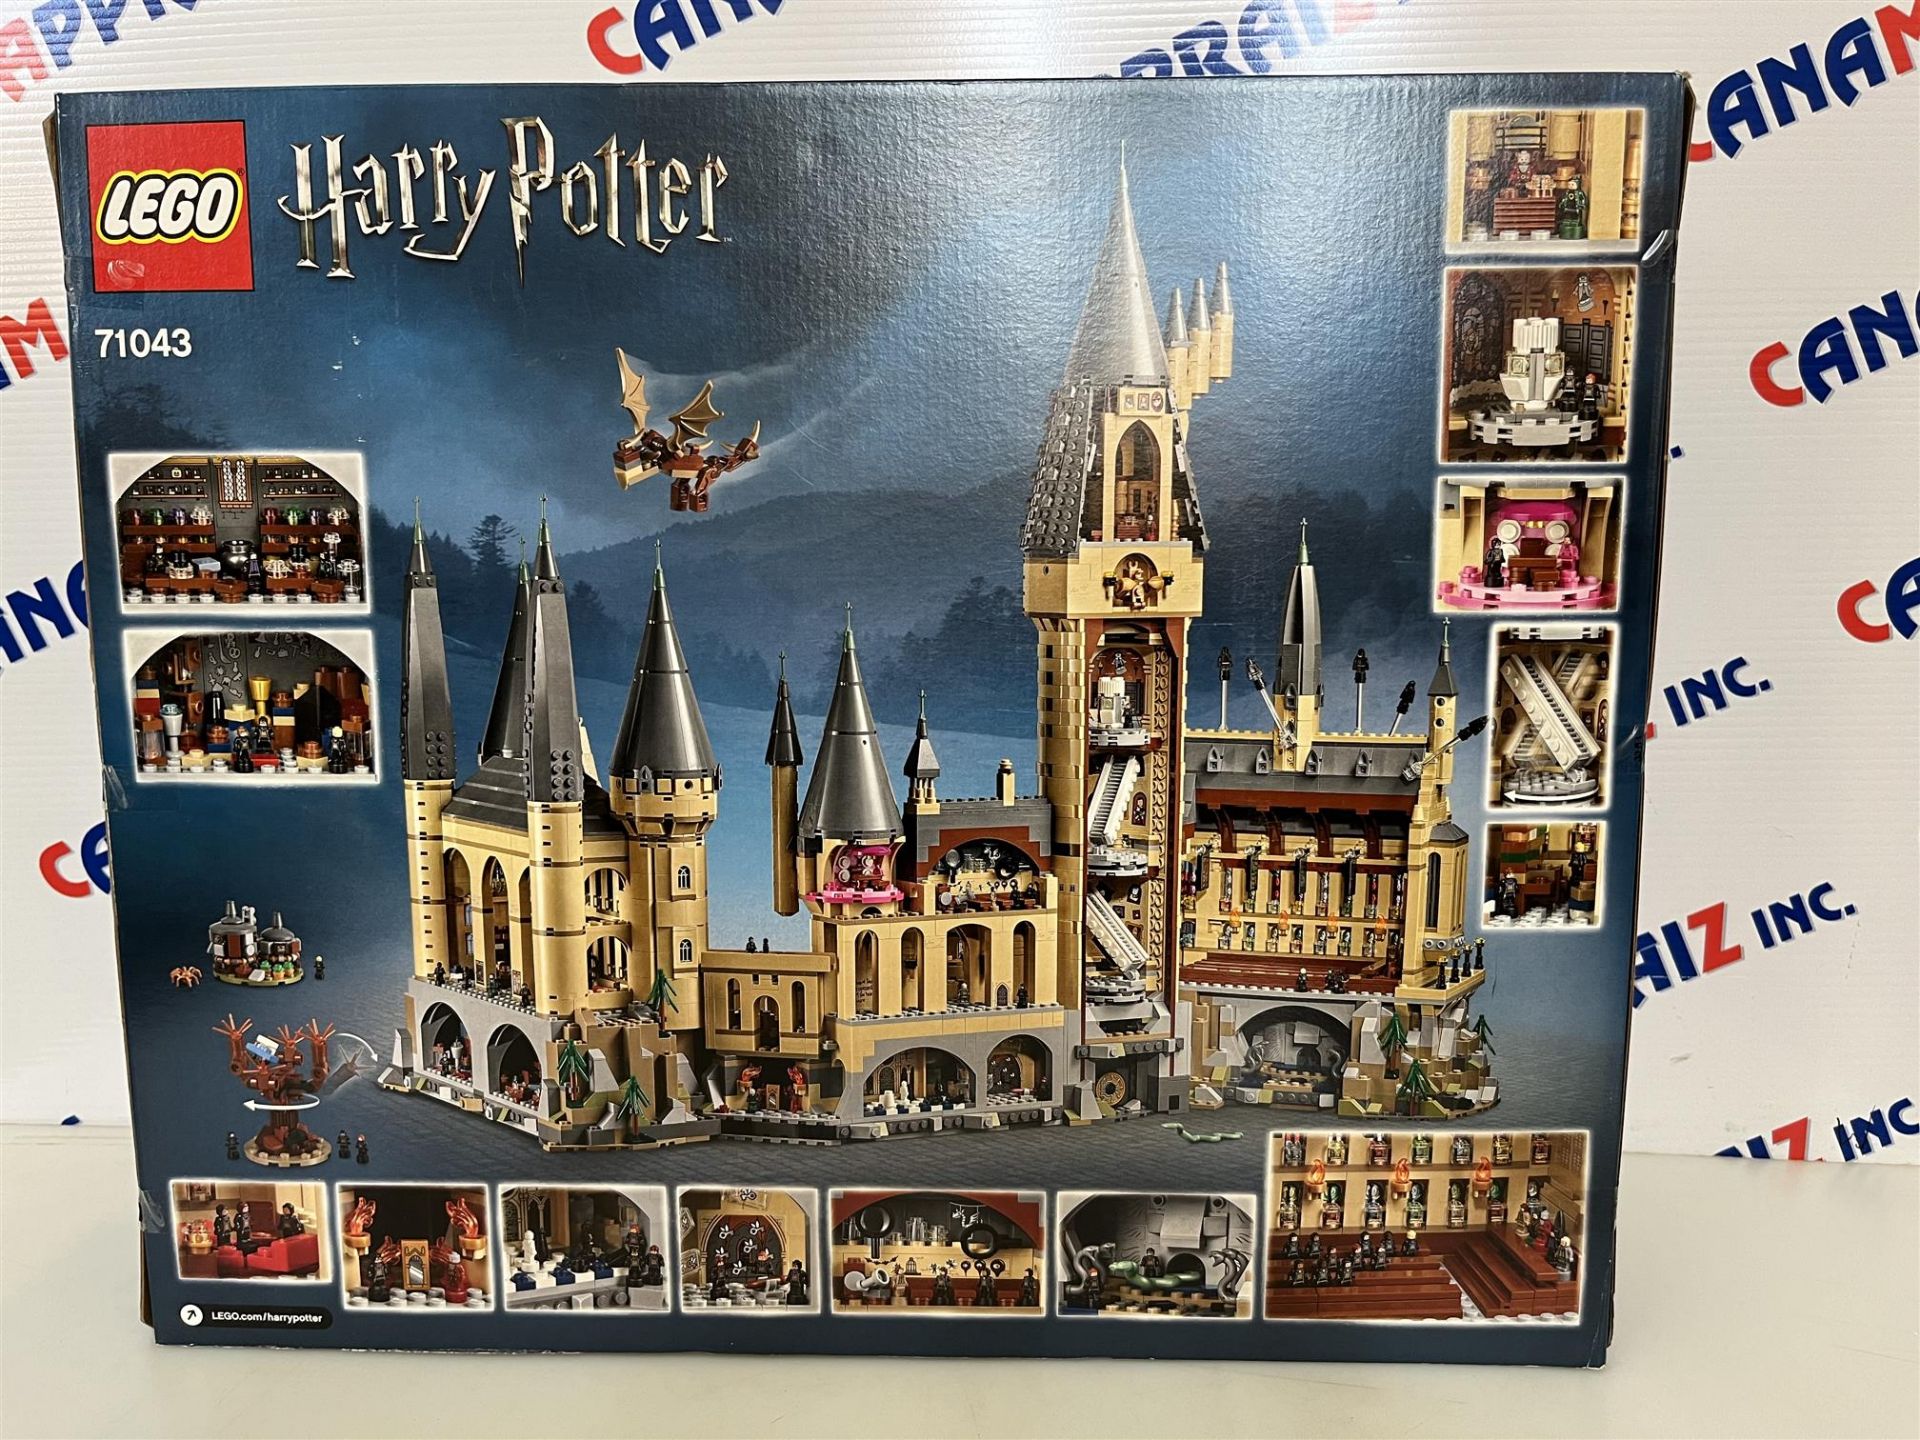 Lego Harry Potter - 71043 Hogwarts Castle - Ages 16+ - 6020 PCS - Image 2 of 2